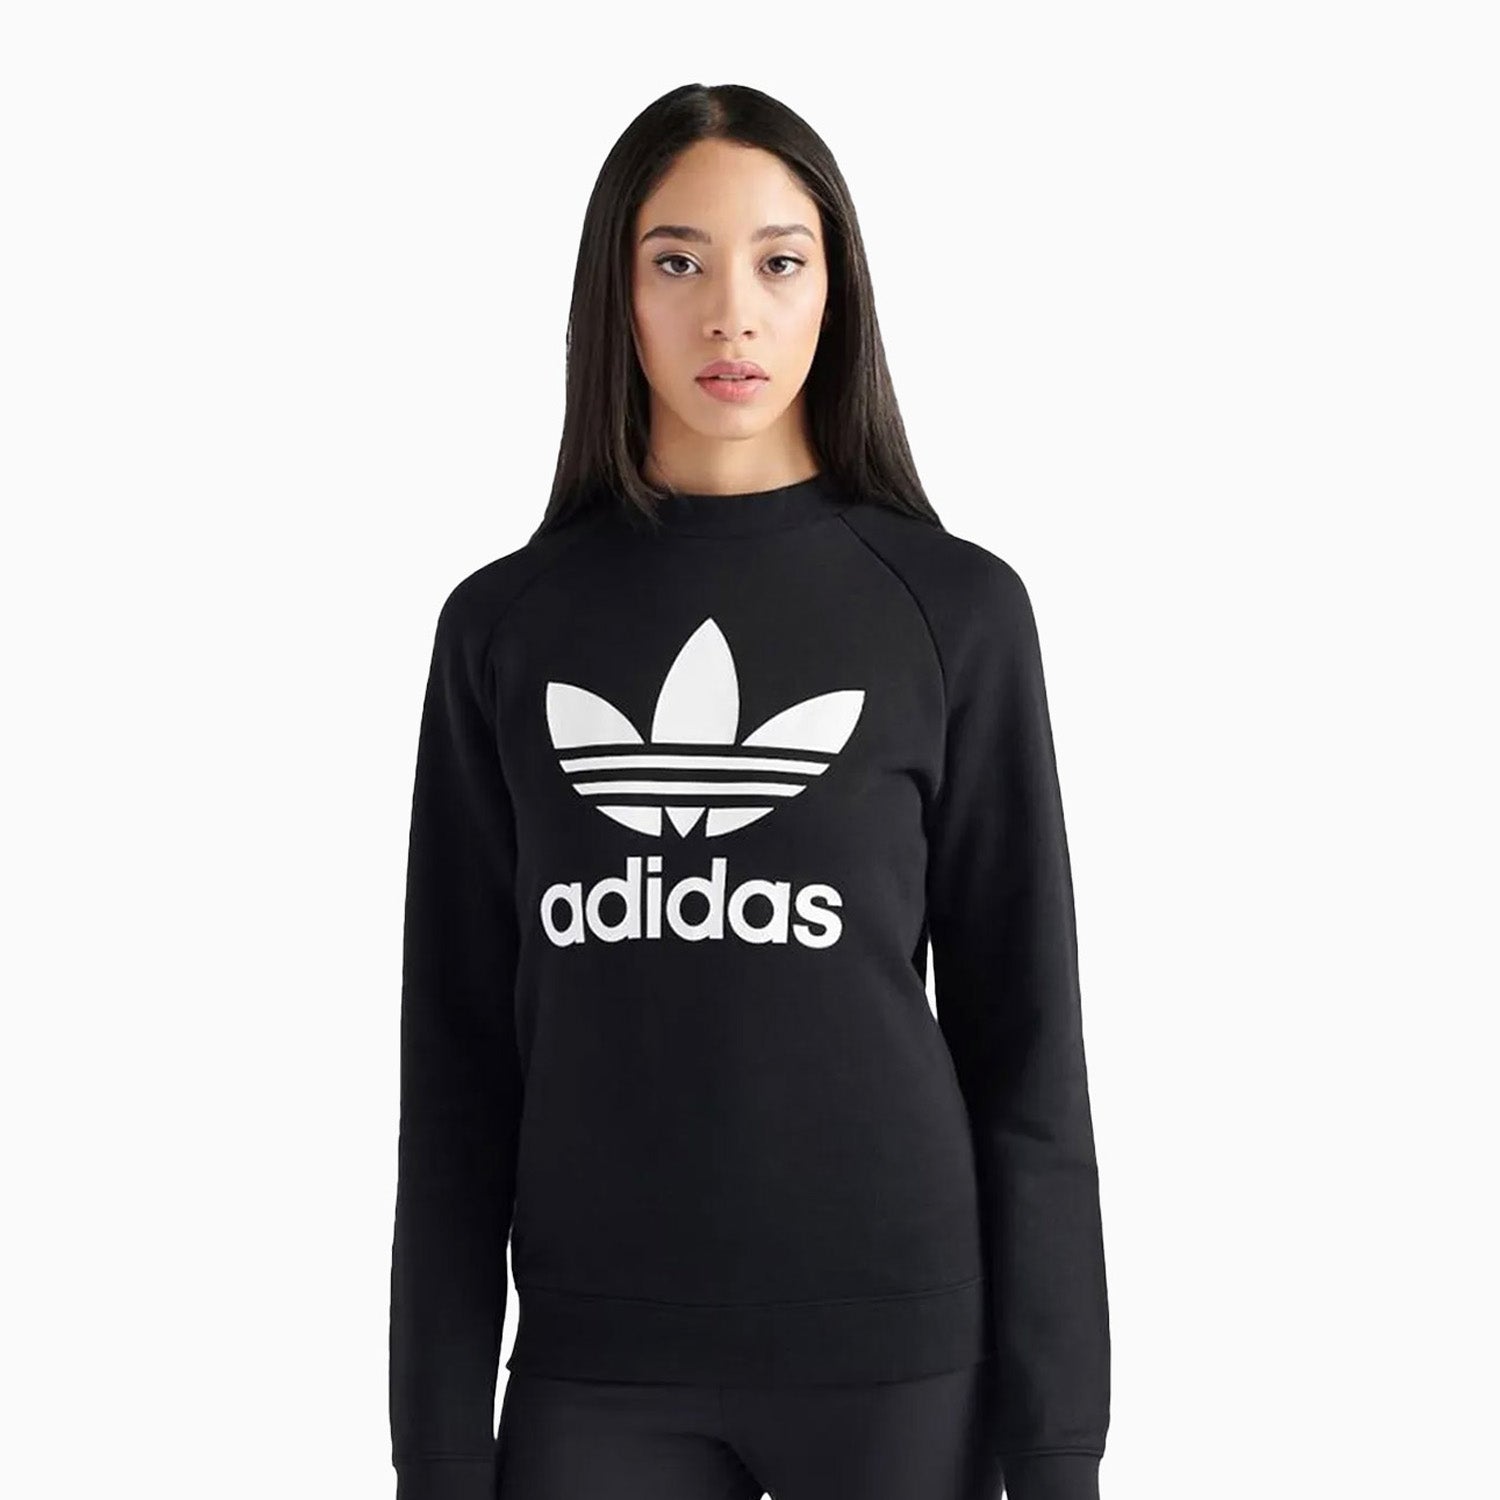 adidas-womens-trefoil-crewneck-sweatshirt-dv2612